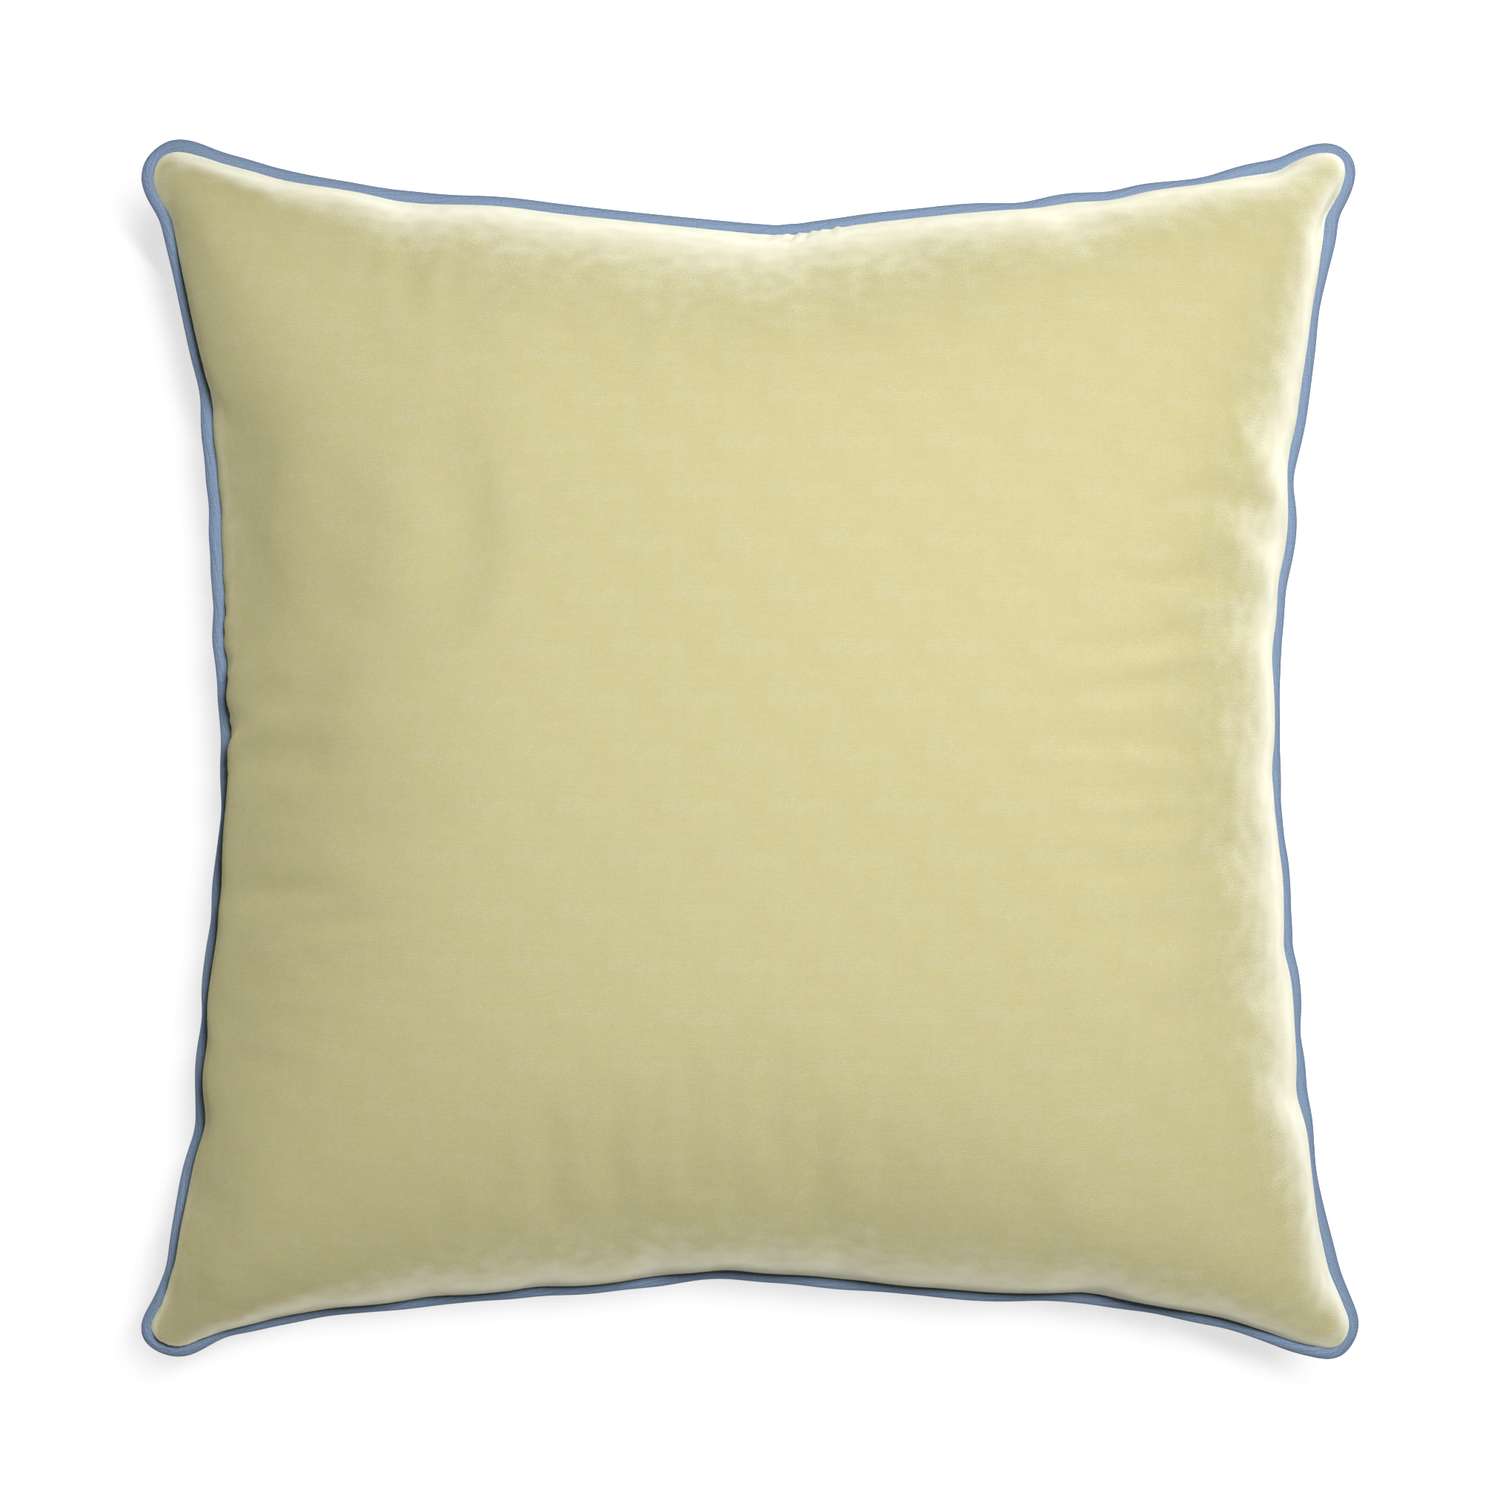 square light green velvet pillow with sky blue piping